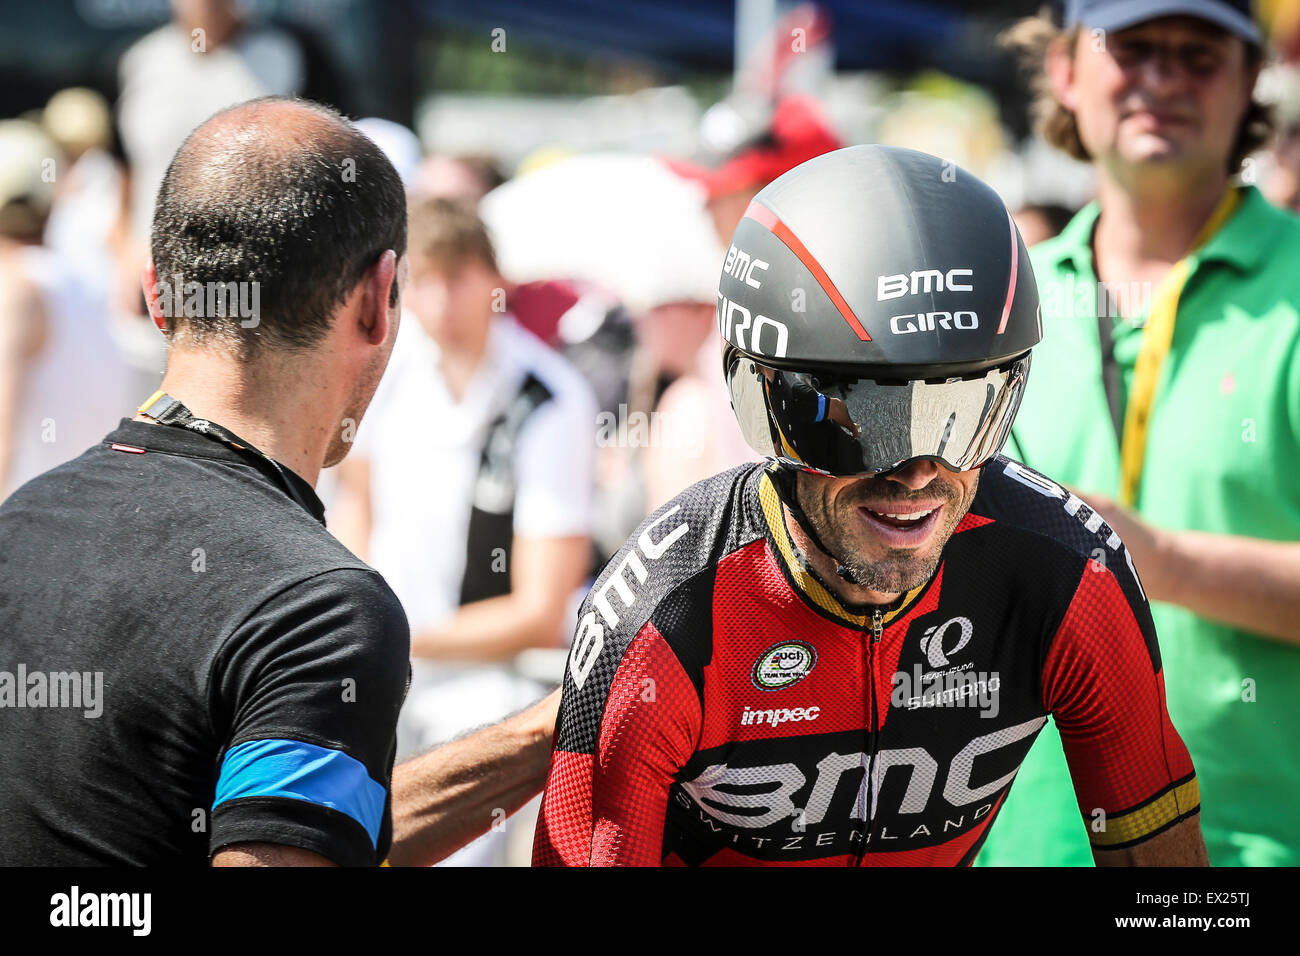 Utrecht, Niederlande. 4. Juli 2015. Tour de France Time Trial Phase, Team BMC Credit: Jan de Wild/Alamy Live News Stockfoto